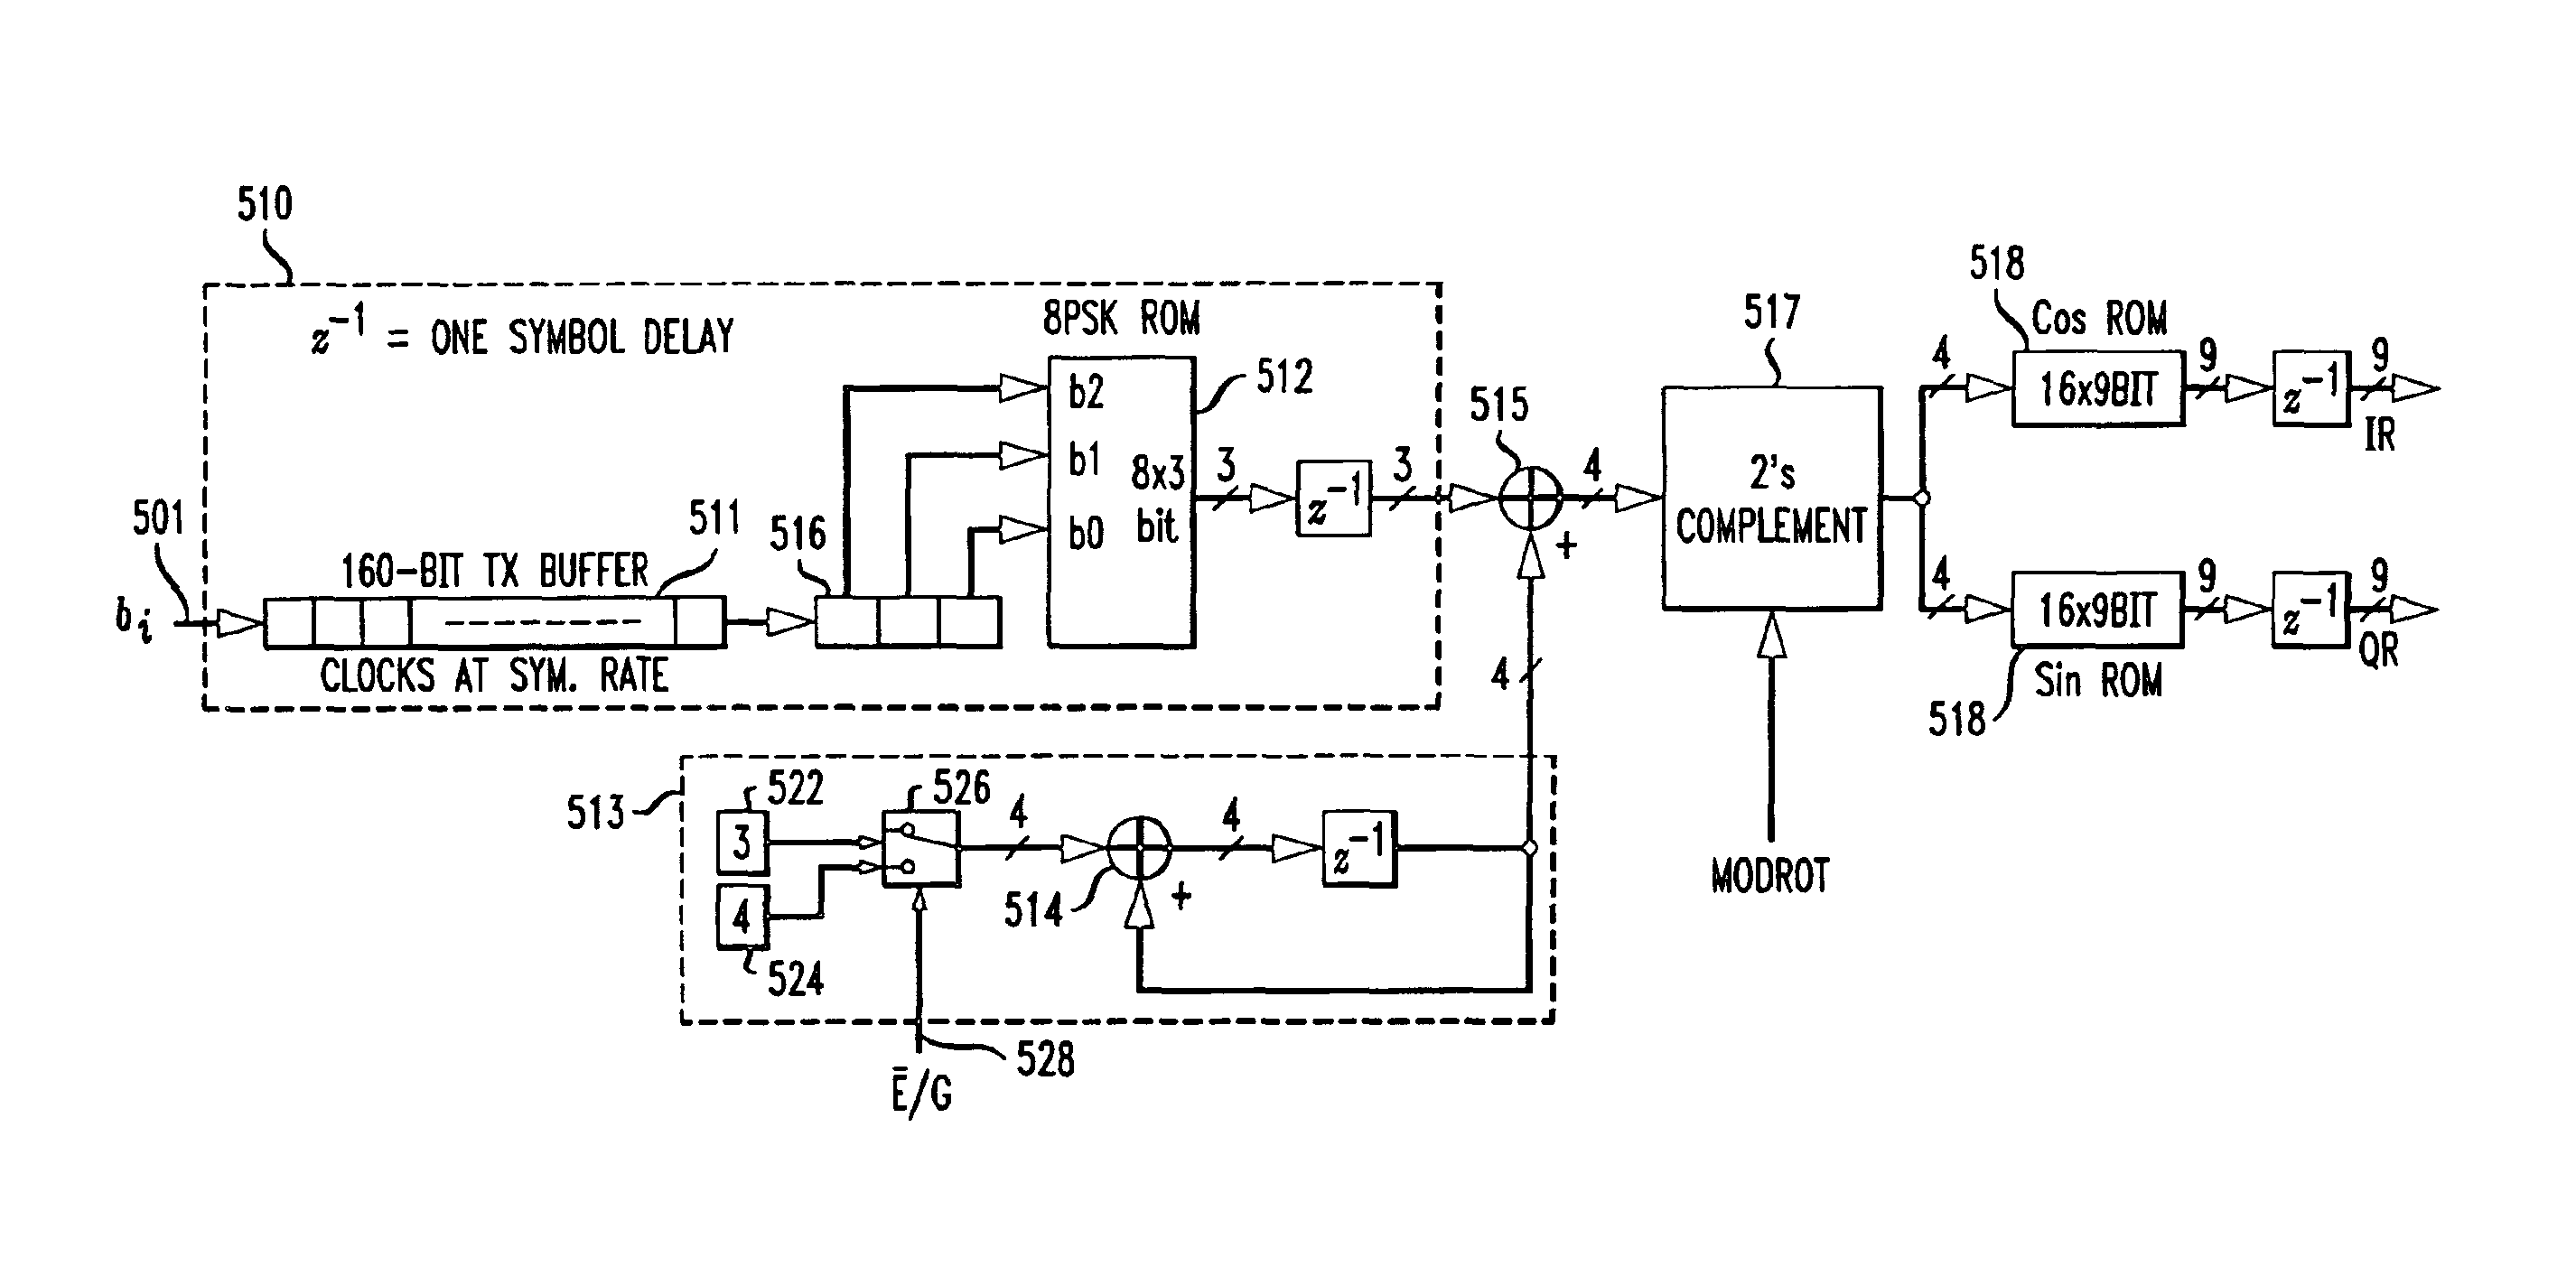 Multi-protocol modulator